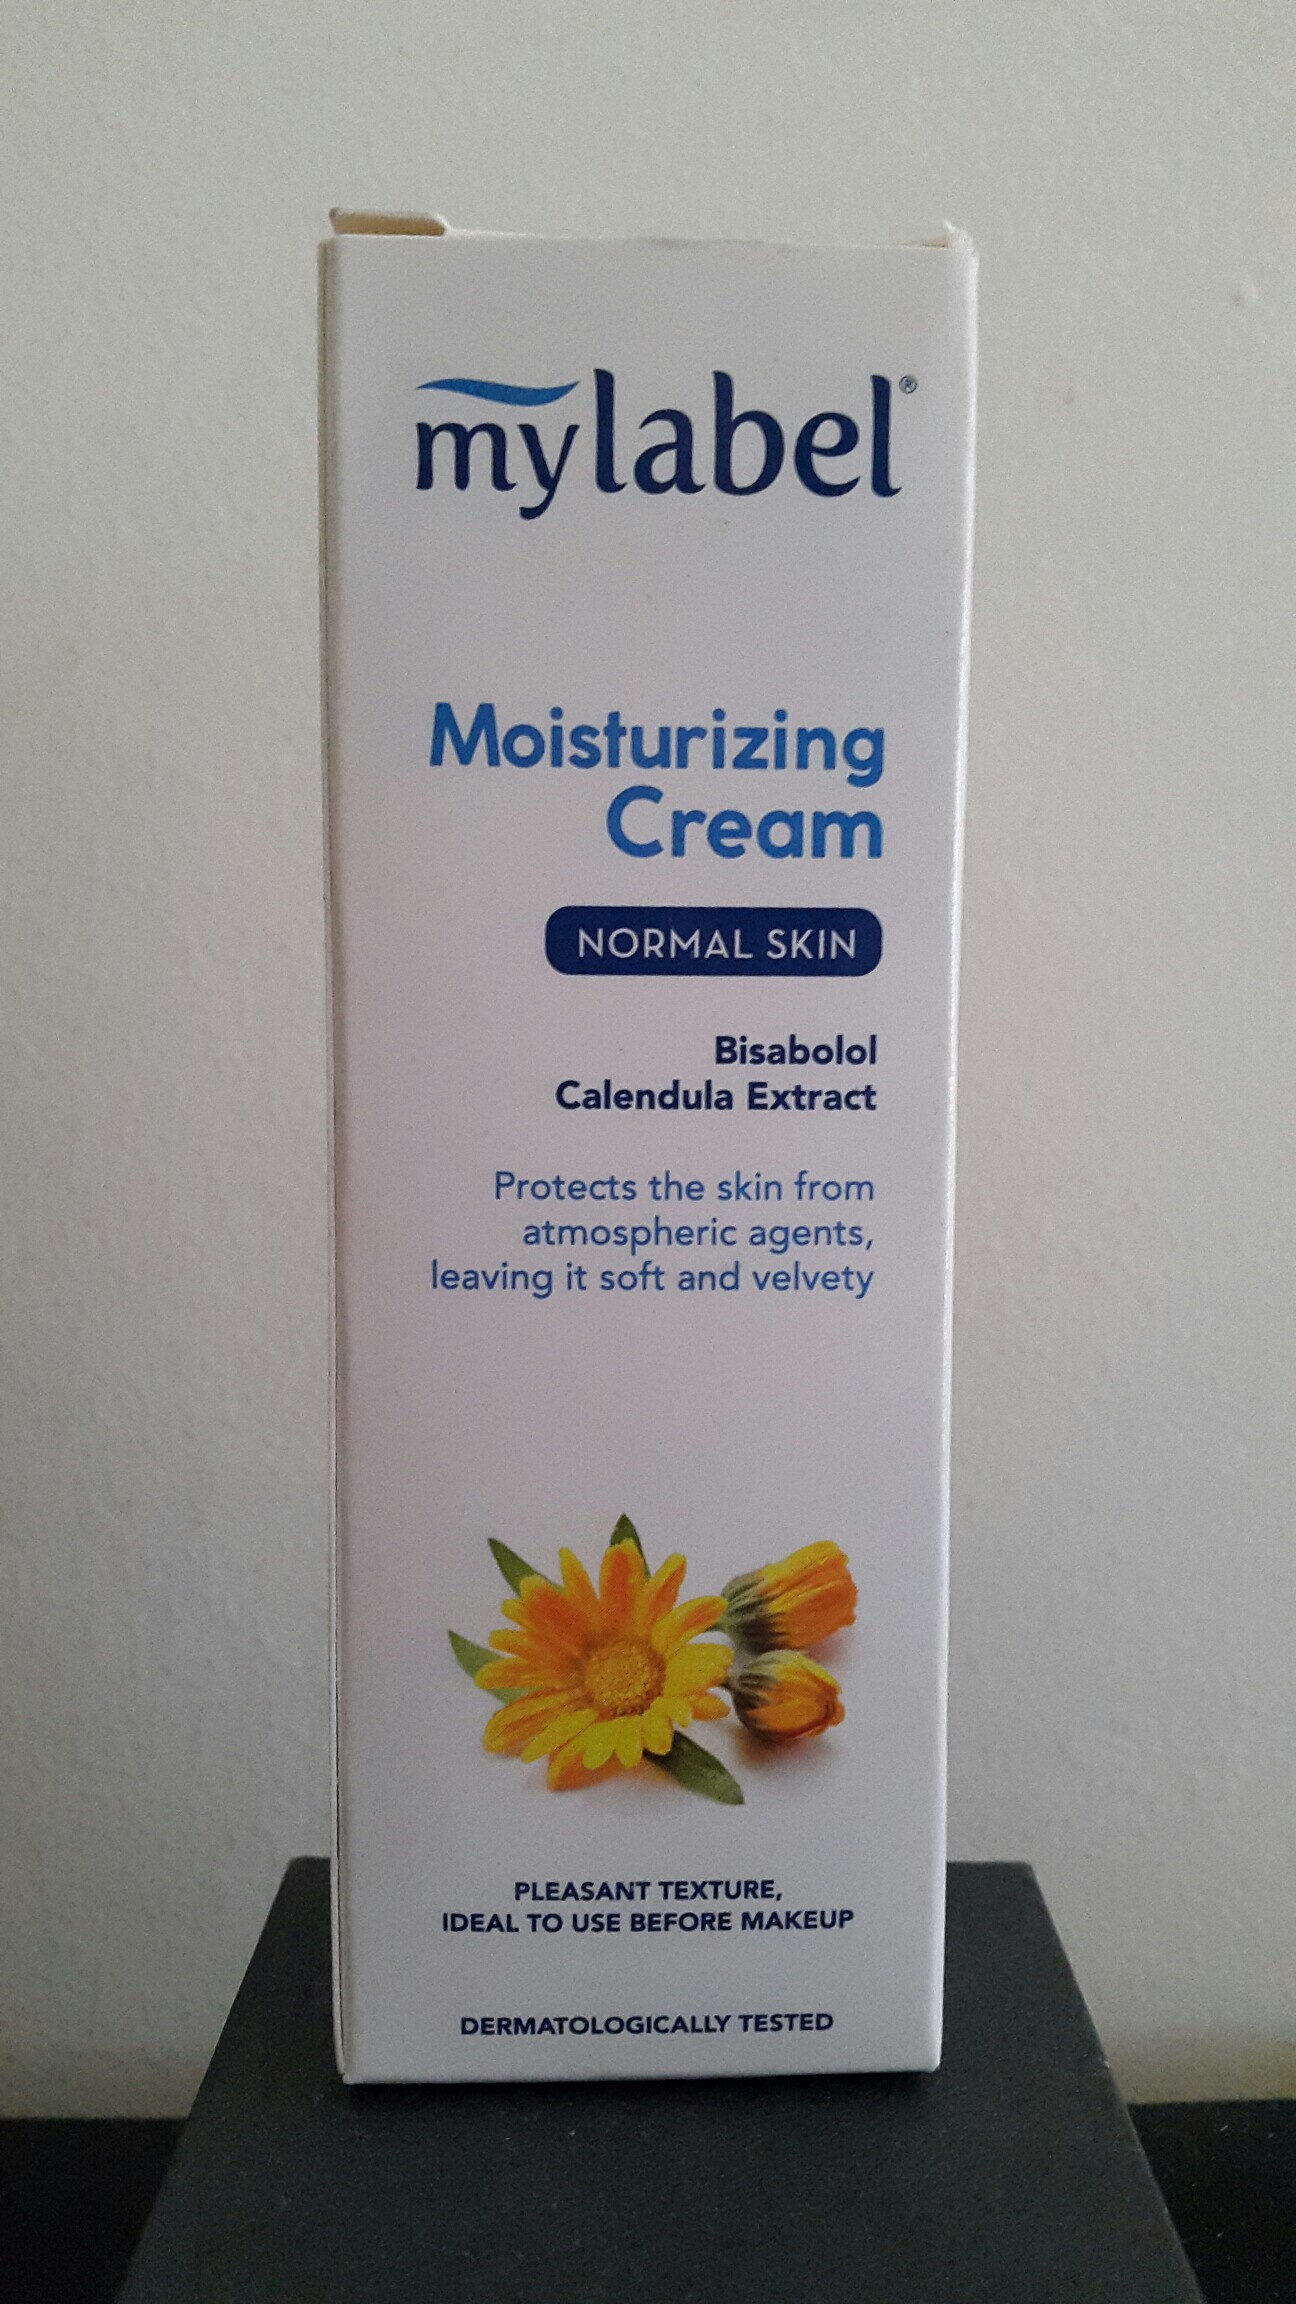 Moisturizing Cream - Normal skin - Tuote - en